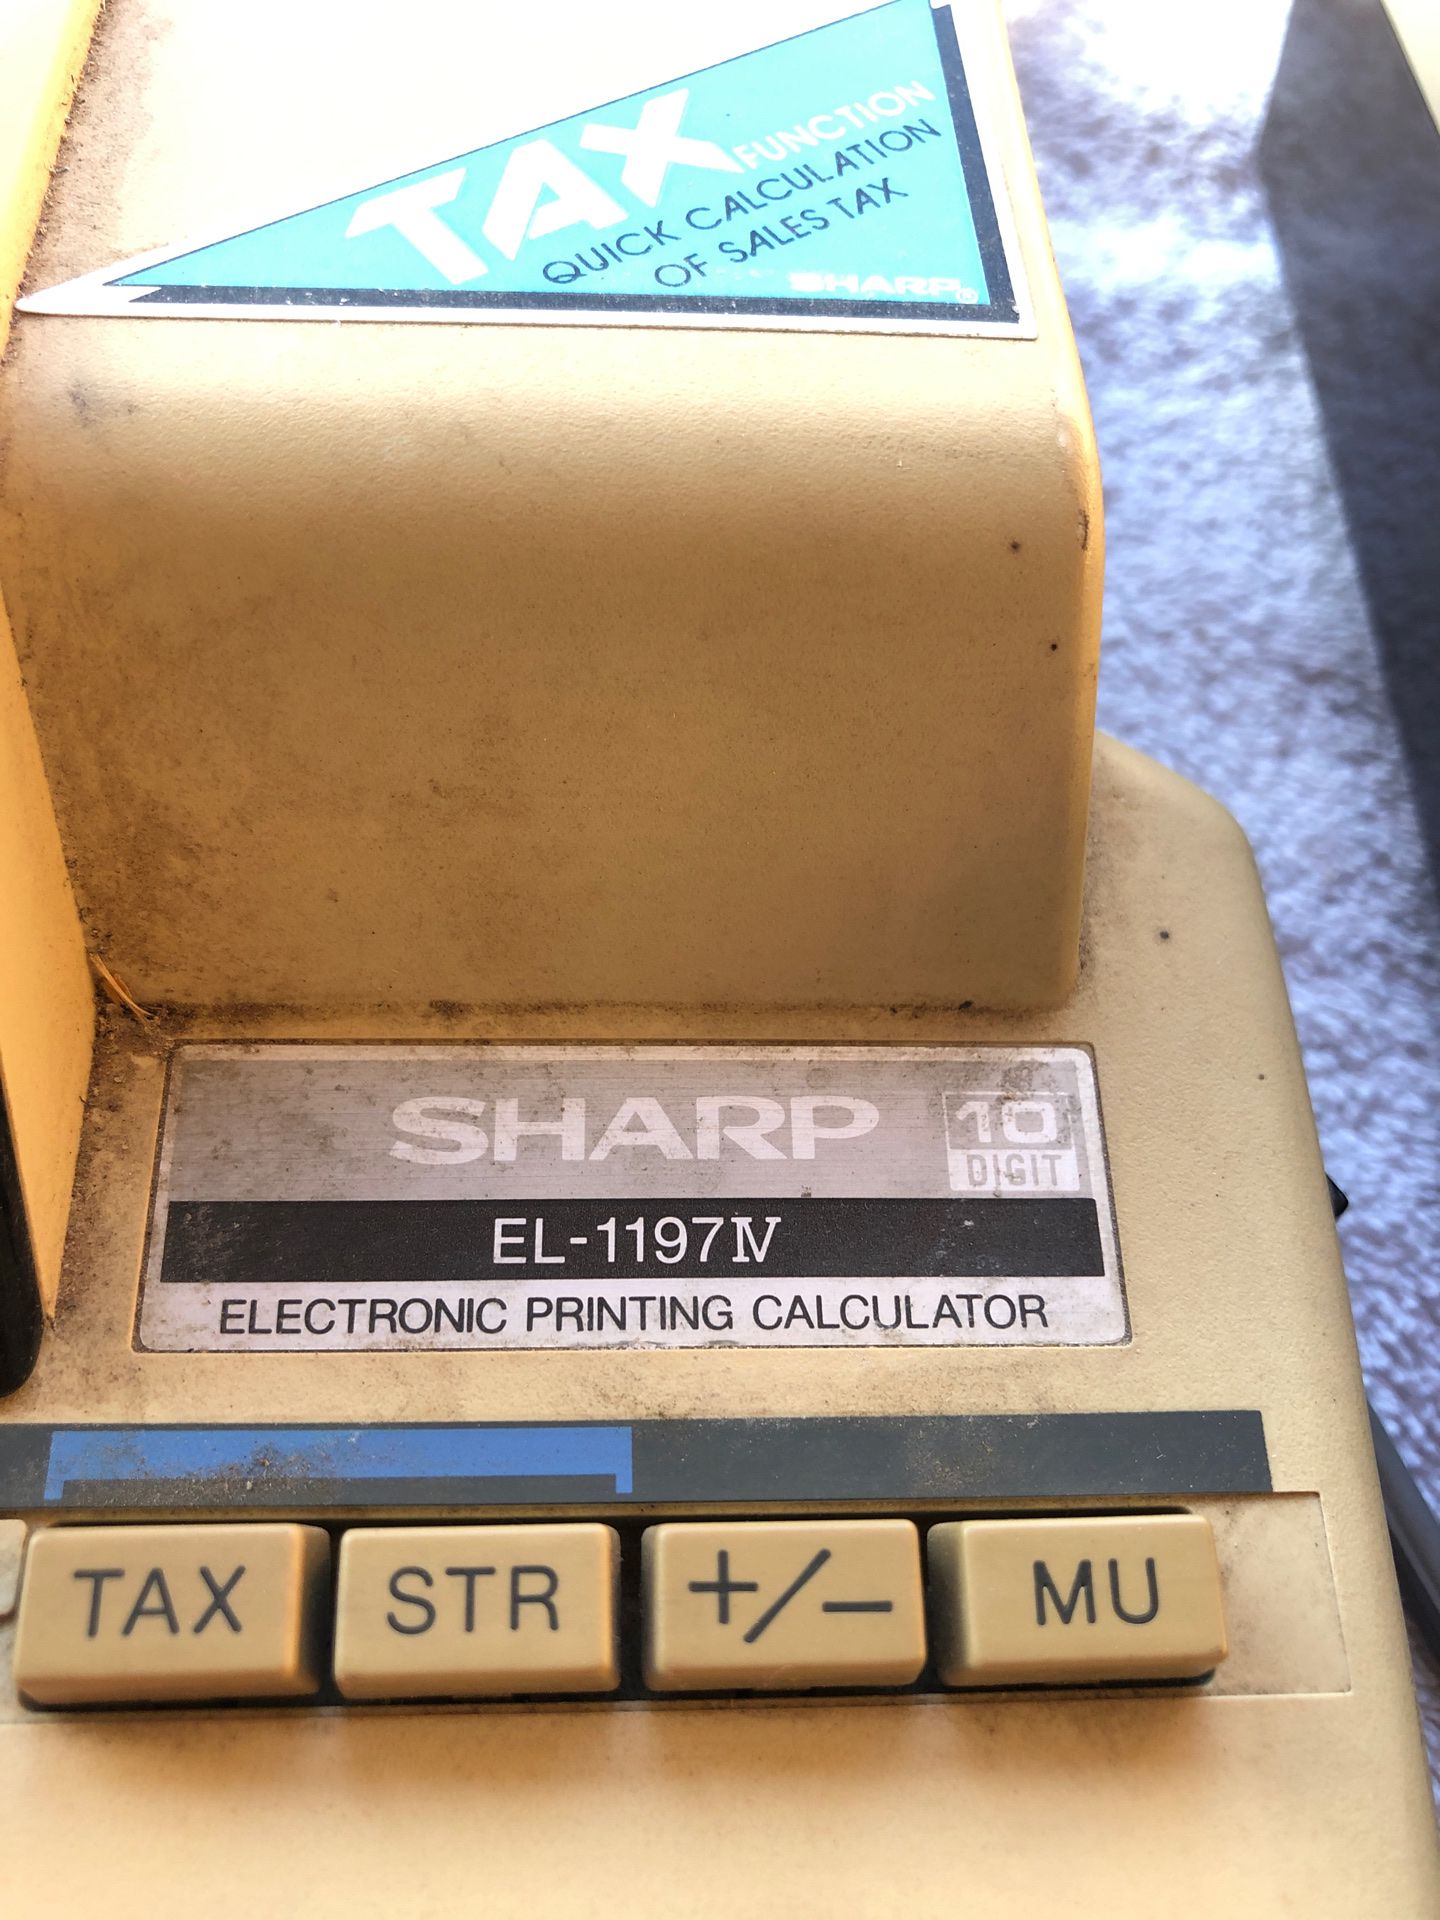 Electronic printing calculator